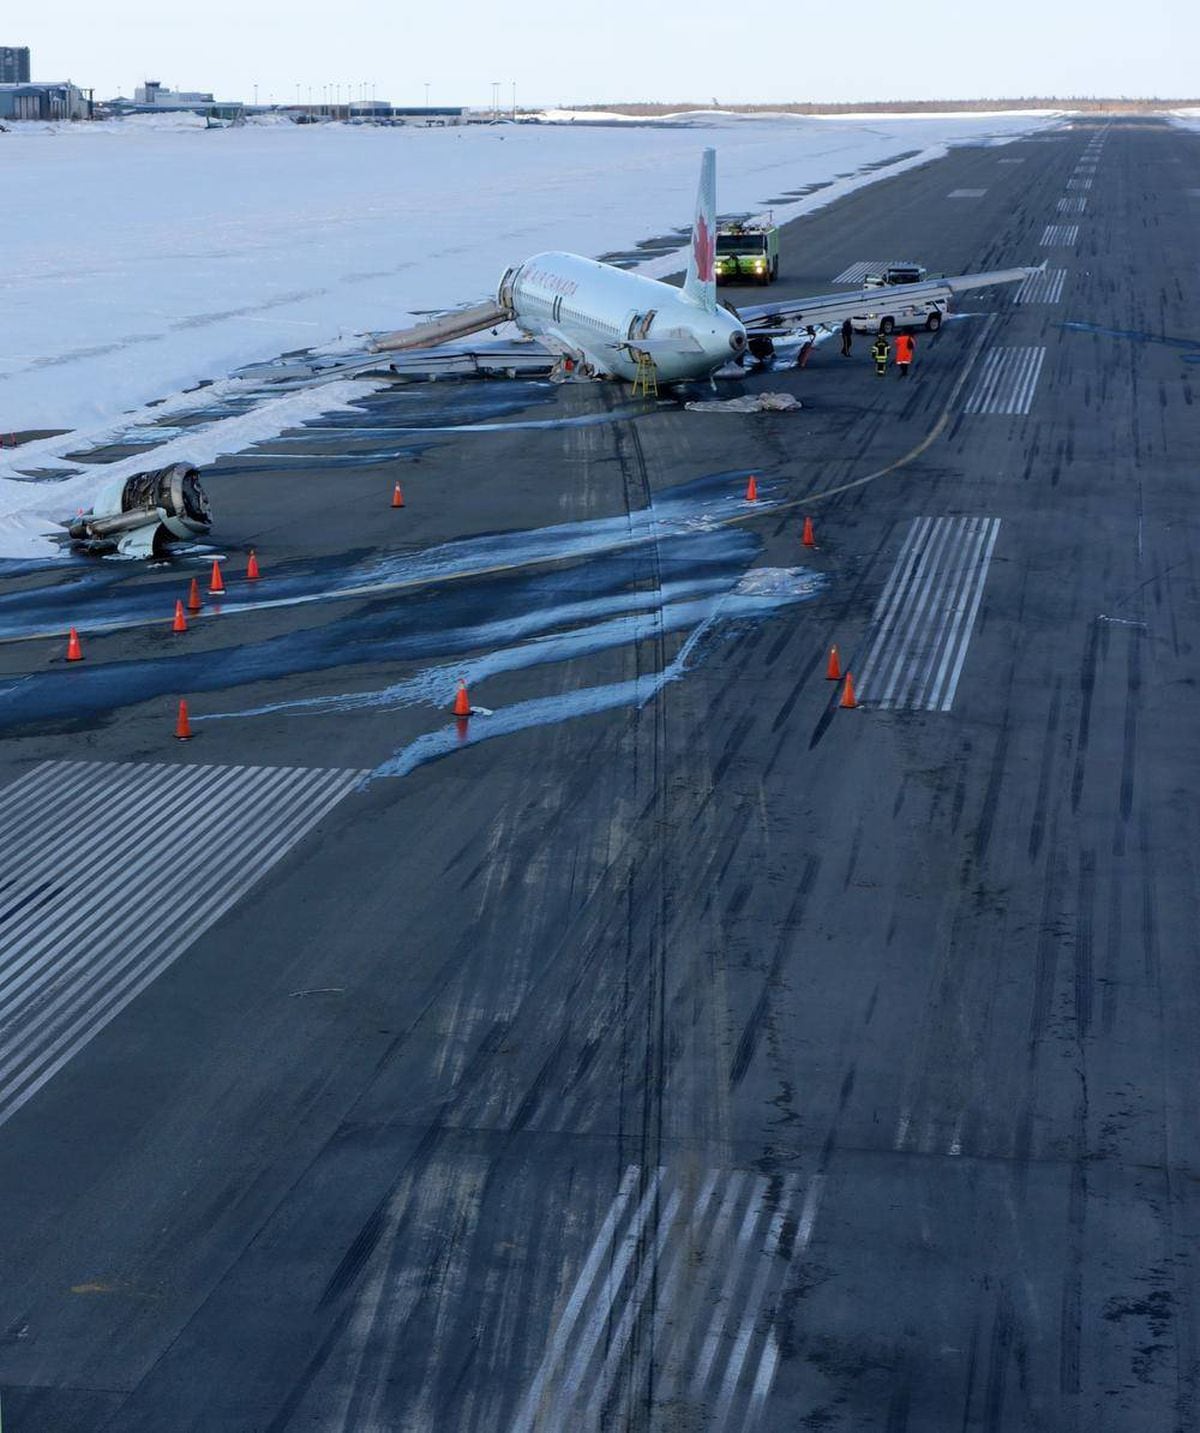 Halifax airport crash